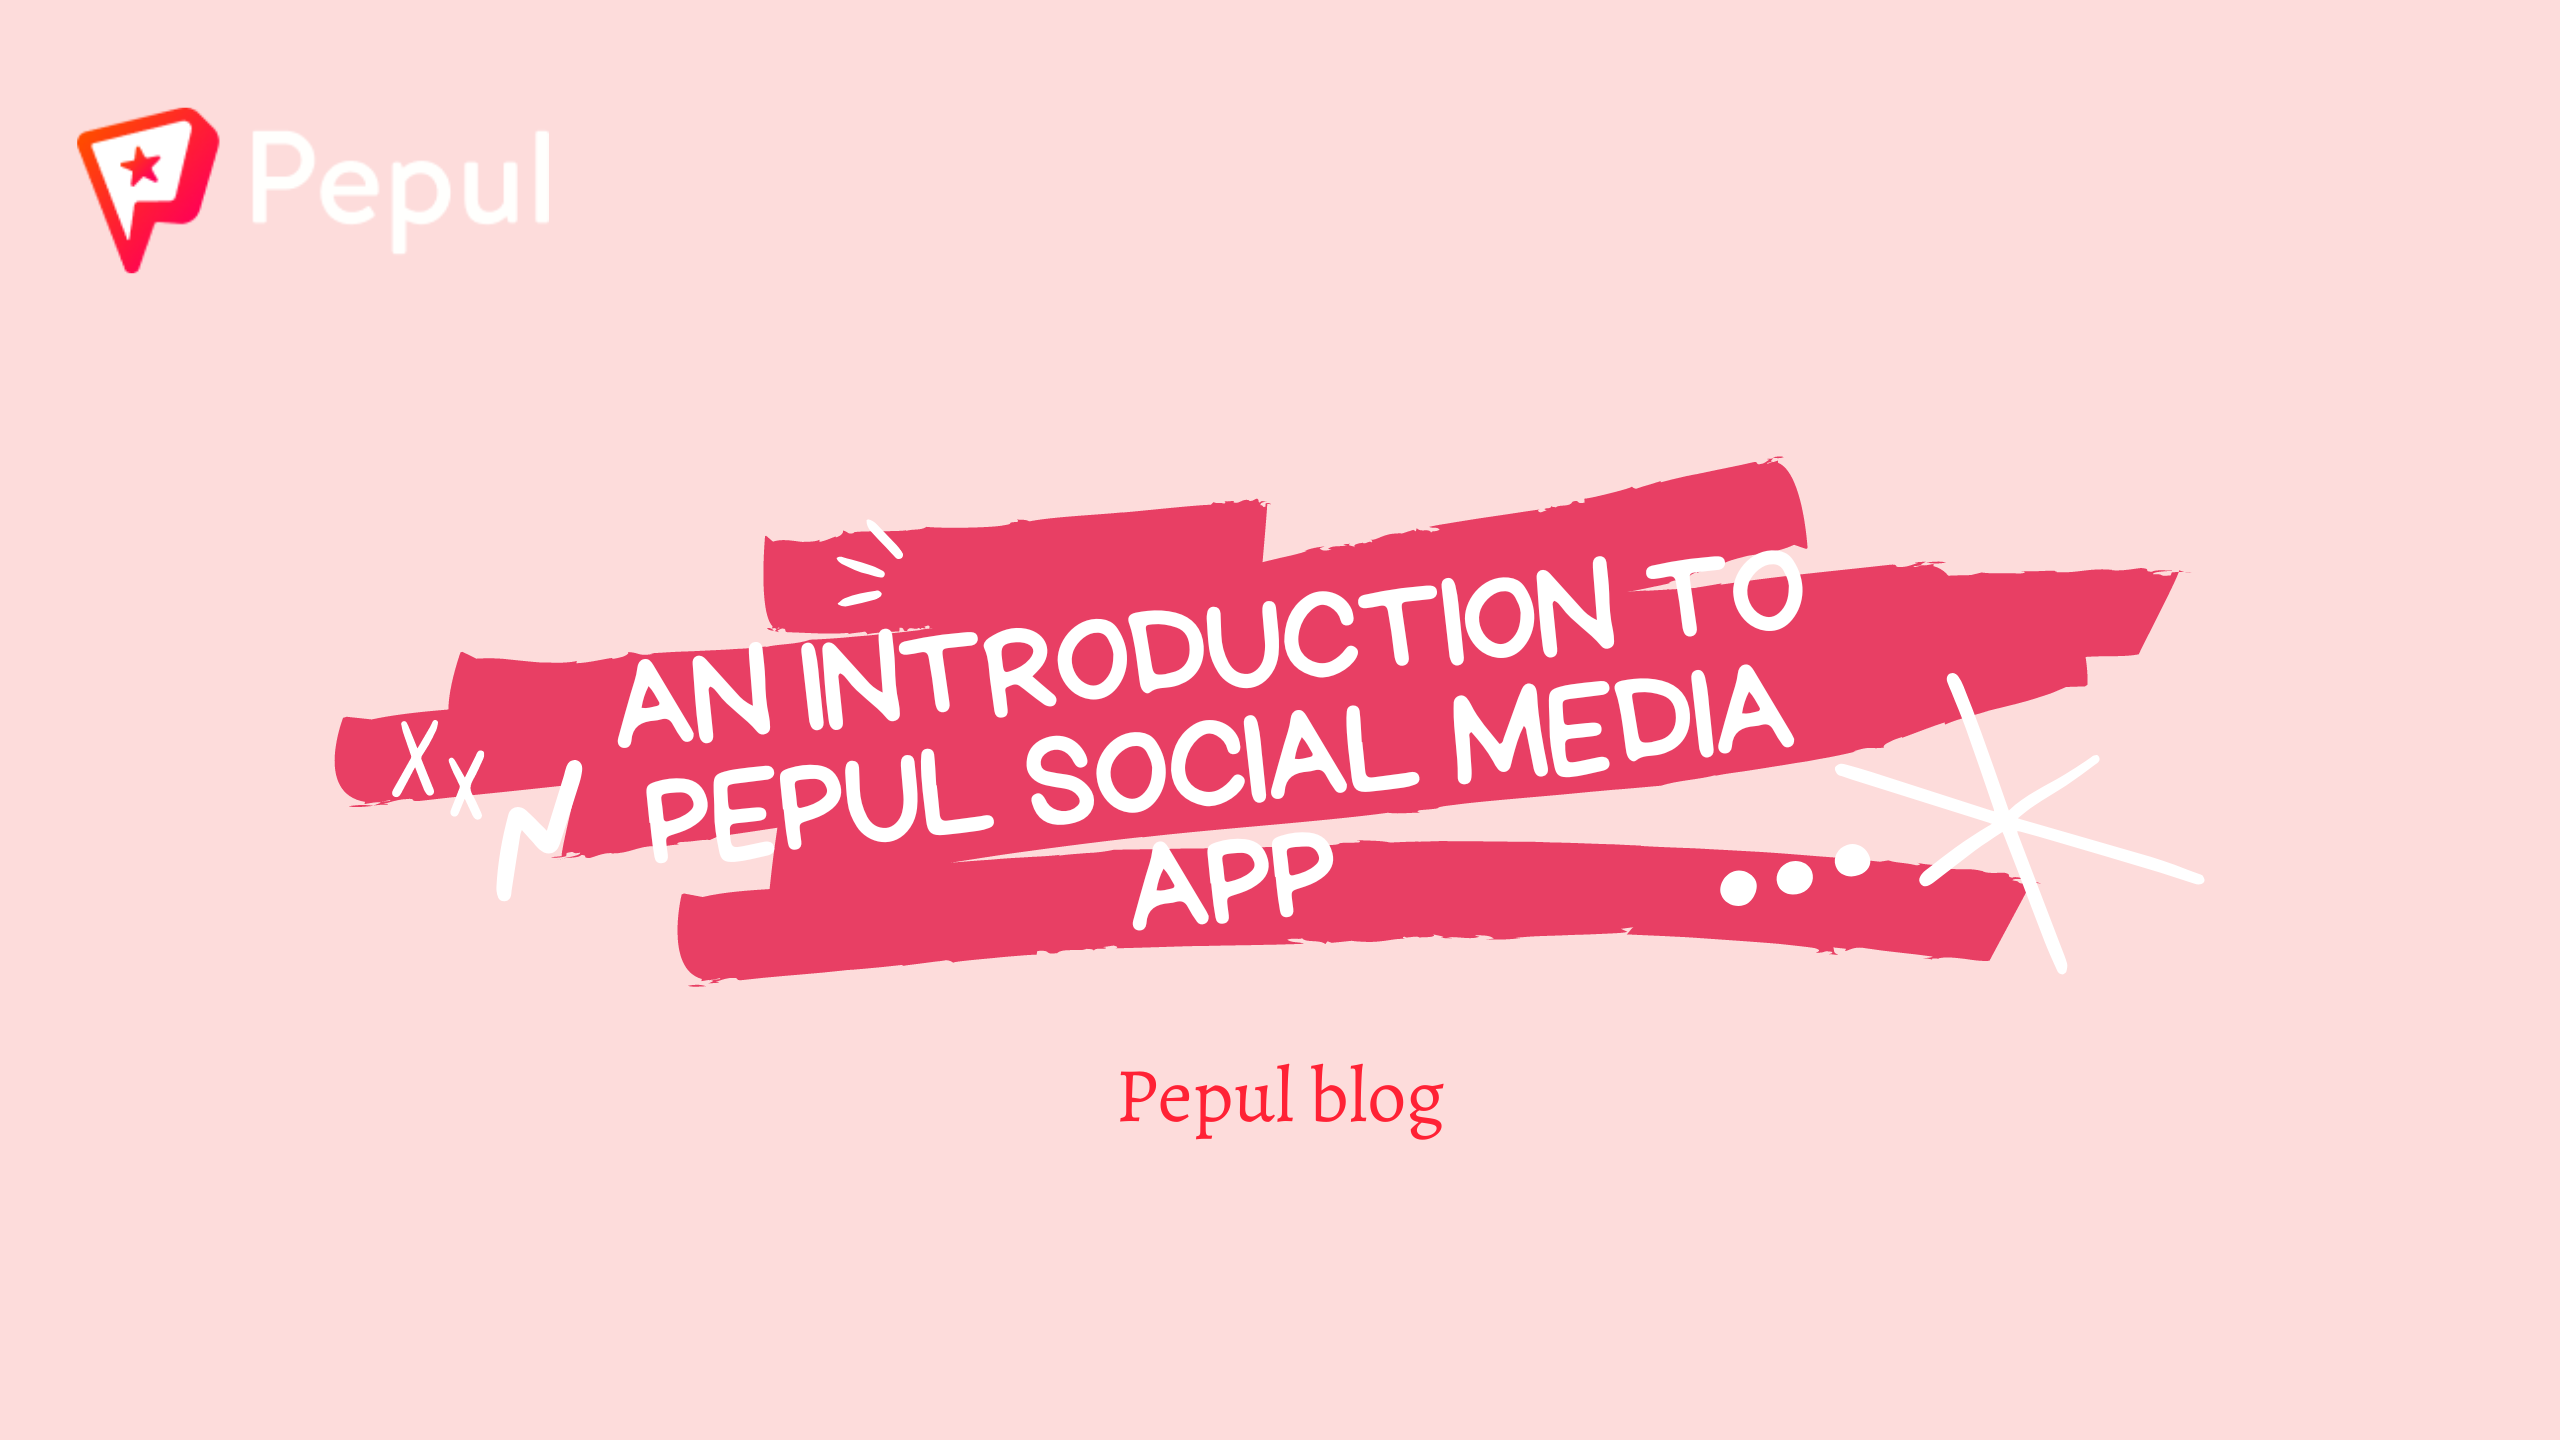 An Introduction to Pepul Social Media App